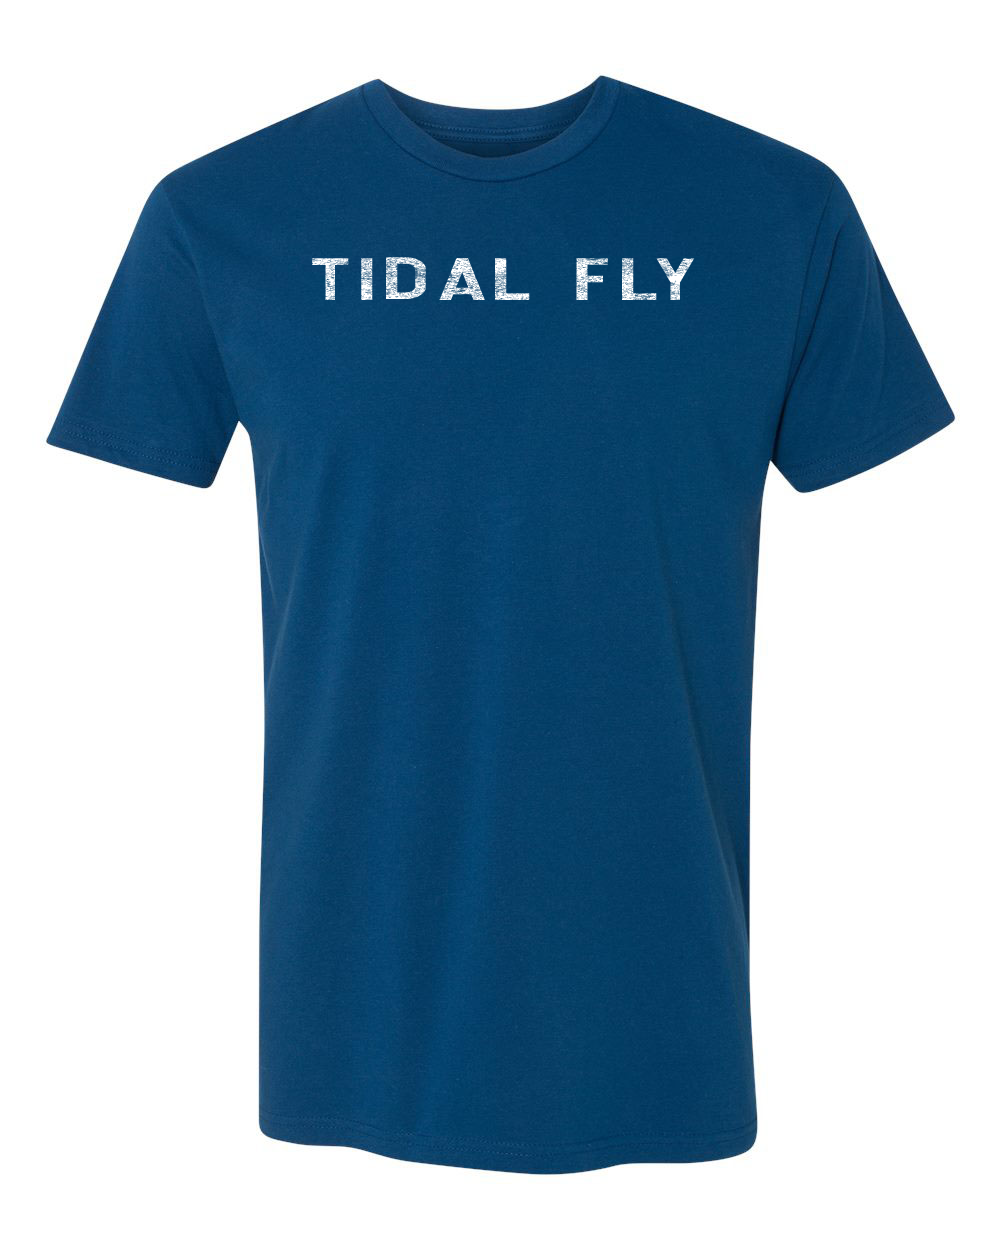 Long Sleeve Tidal Fly Front, logo back collar